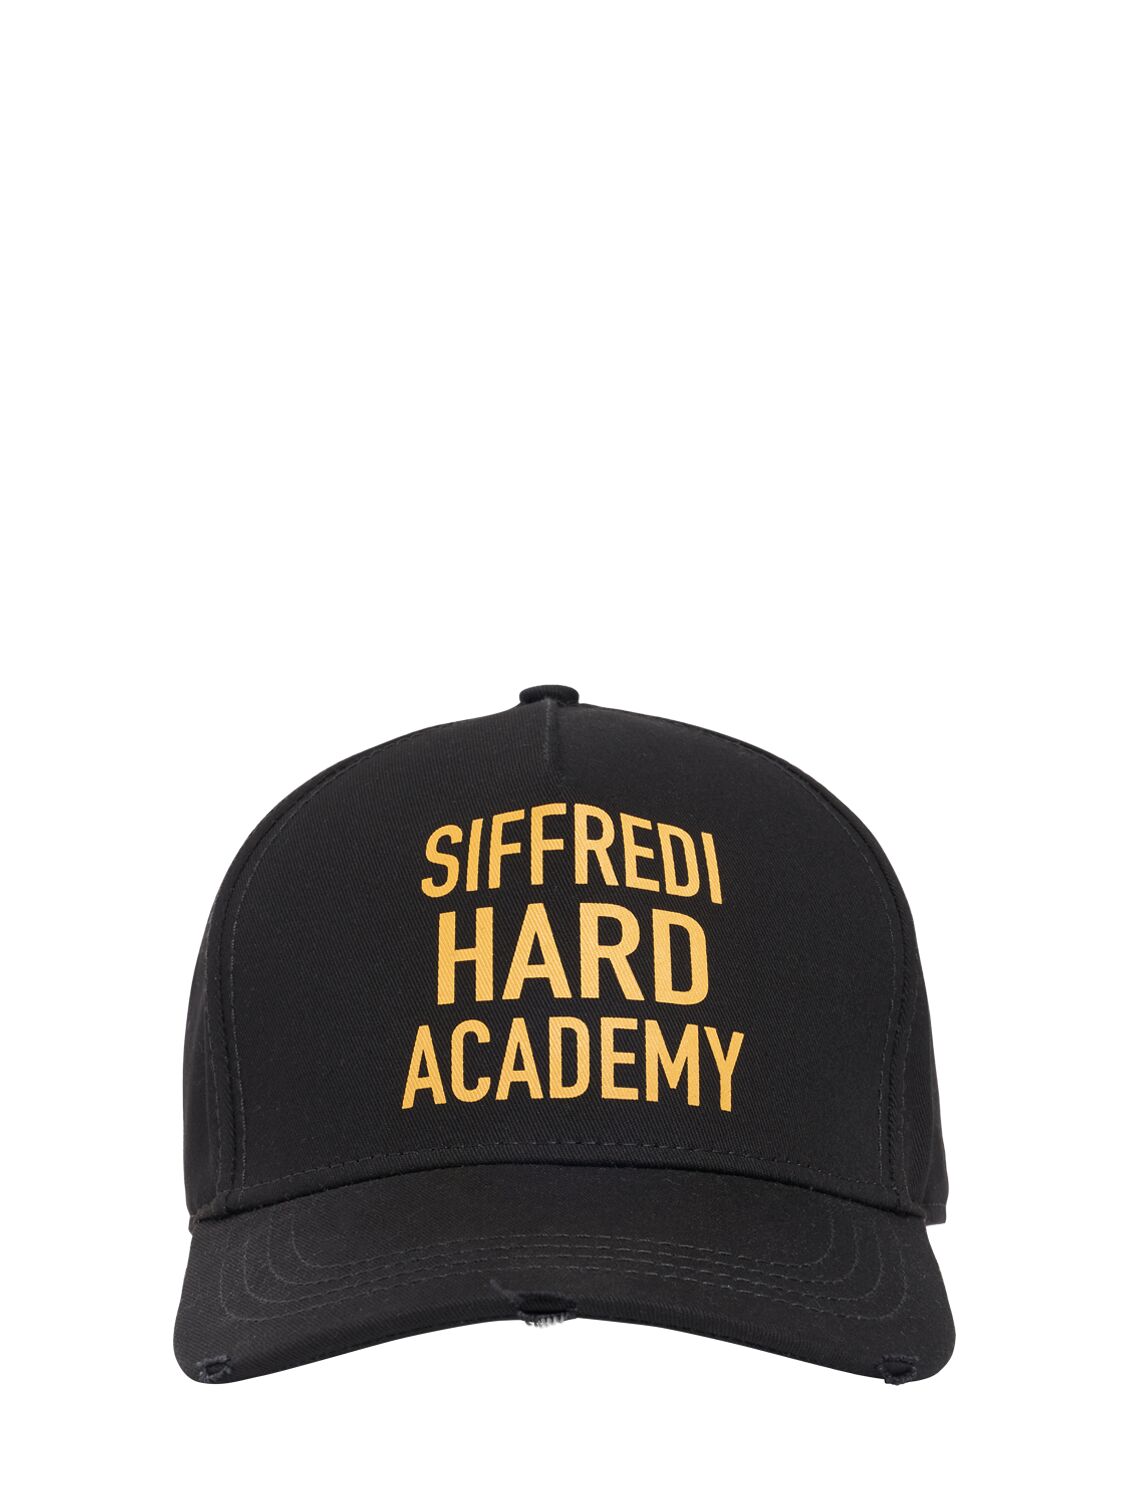 Siffredi Hard Academy Baseball Cap